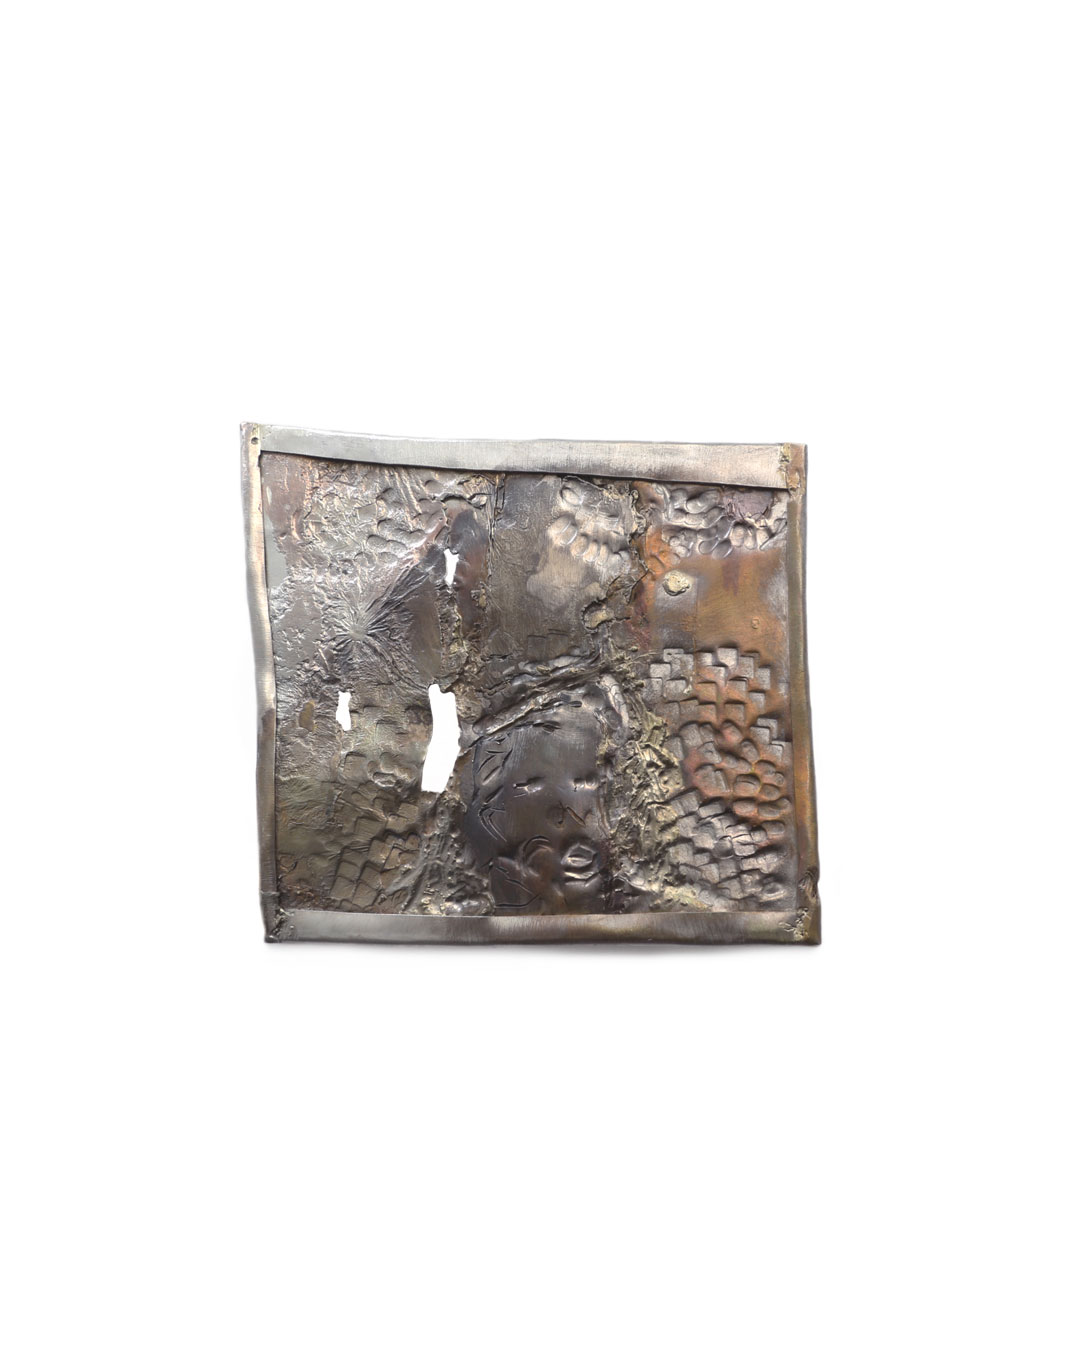 Rudolf Kocéa, Oh Donald, 2016, brooch; silver, copper, gold, 100 x 130 mm, €2000